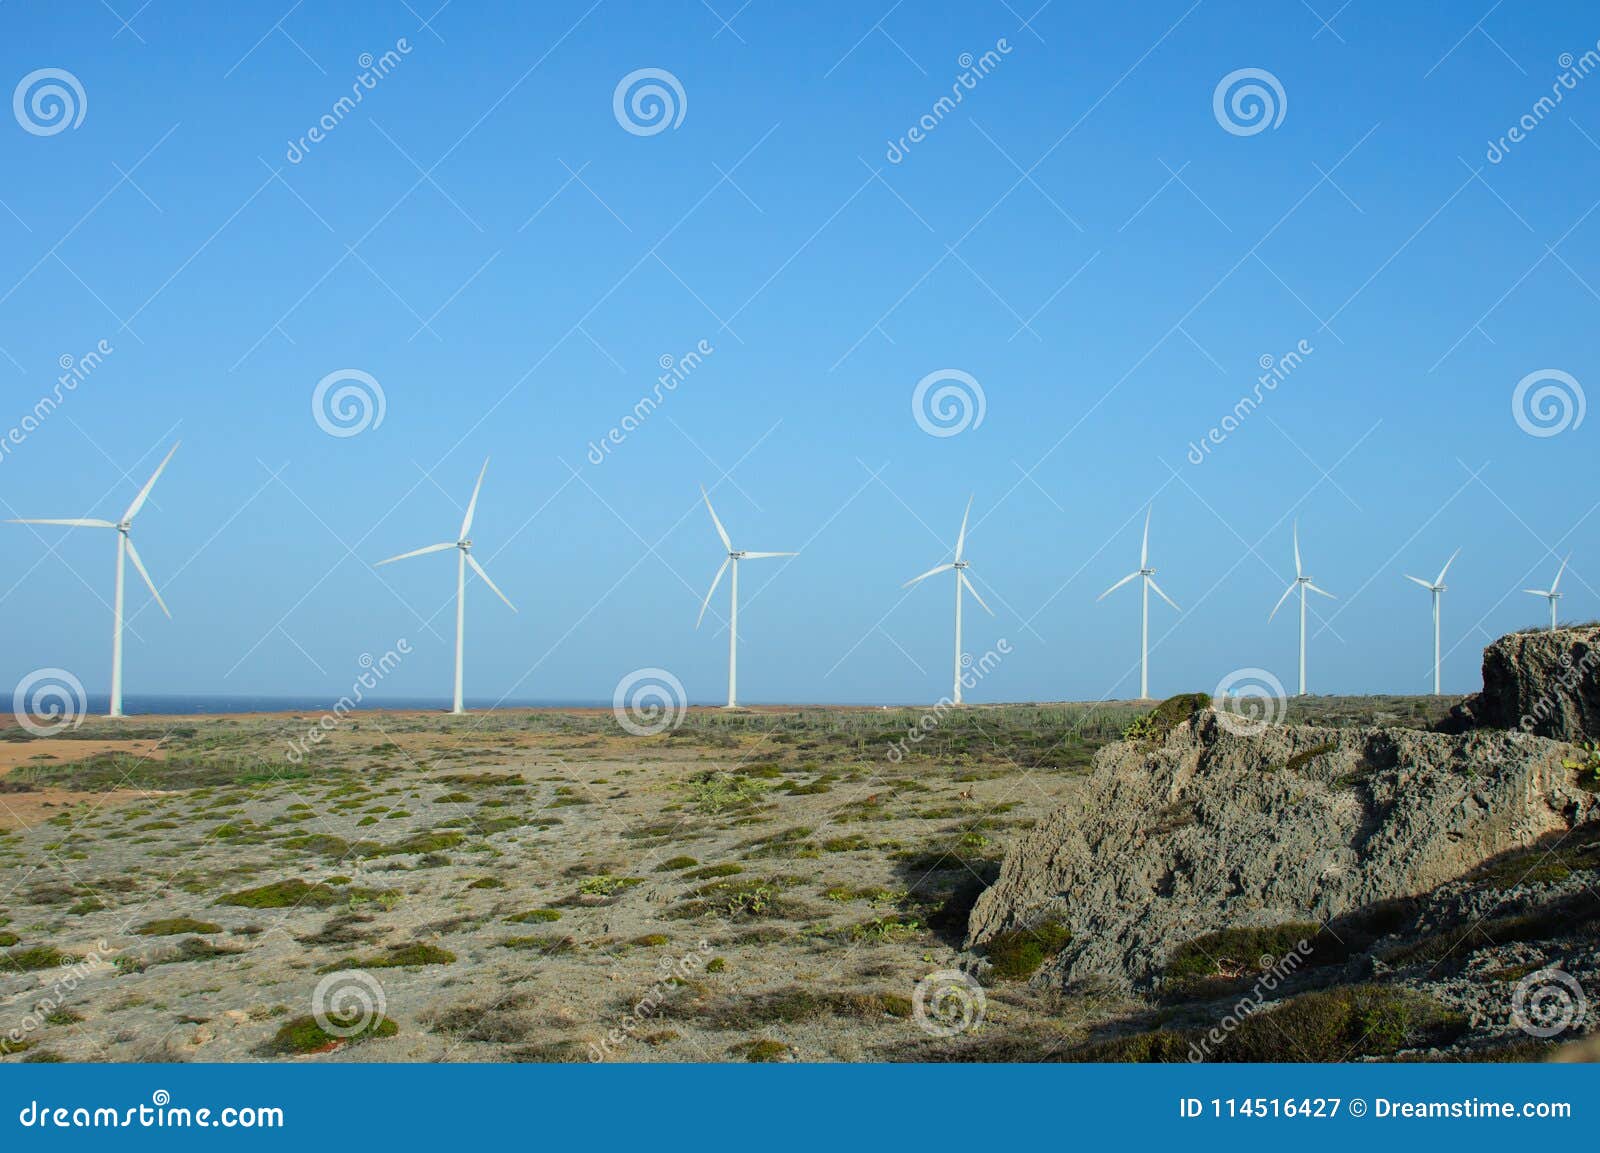 windmills landcape